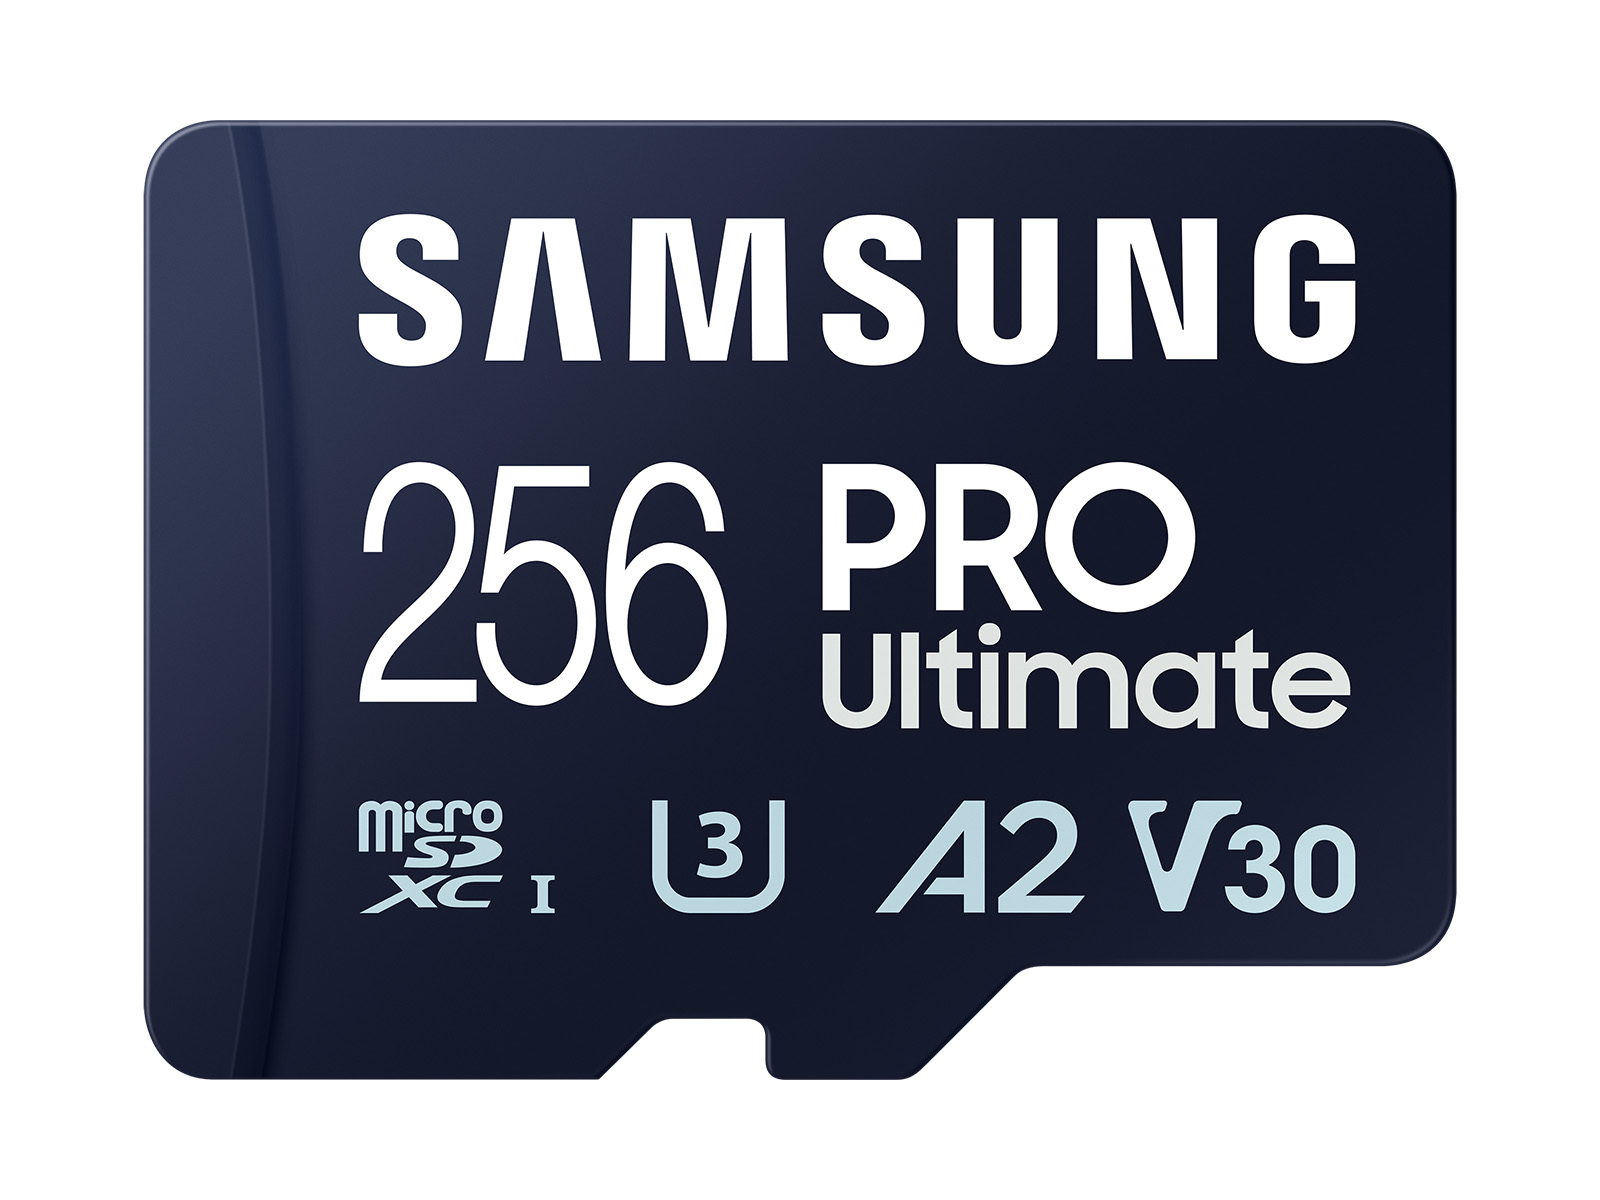 SanDisk micro SD Extreme PRO UHS-1 avec adaptateur (256GB